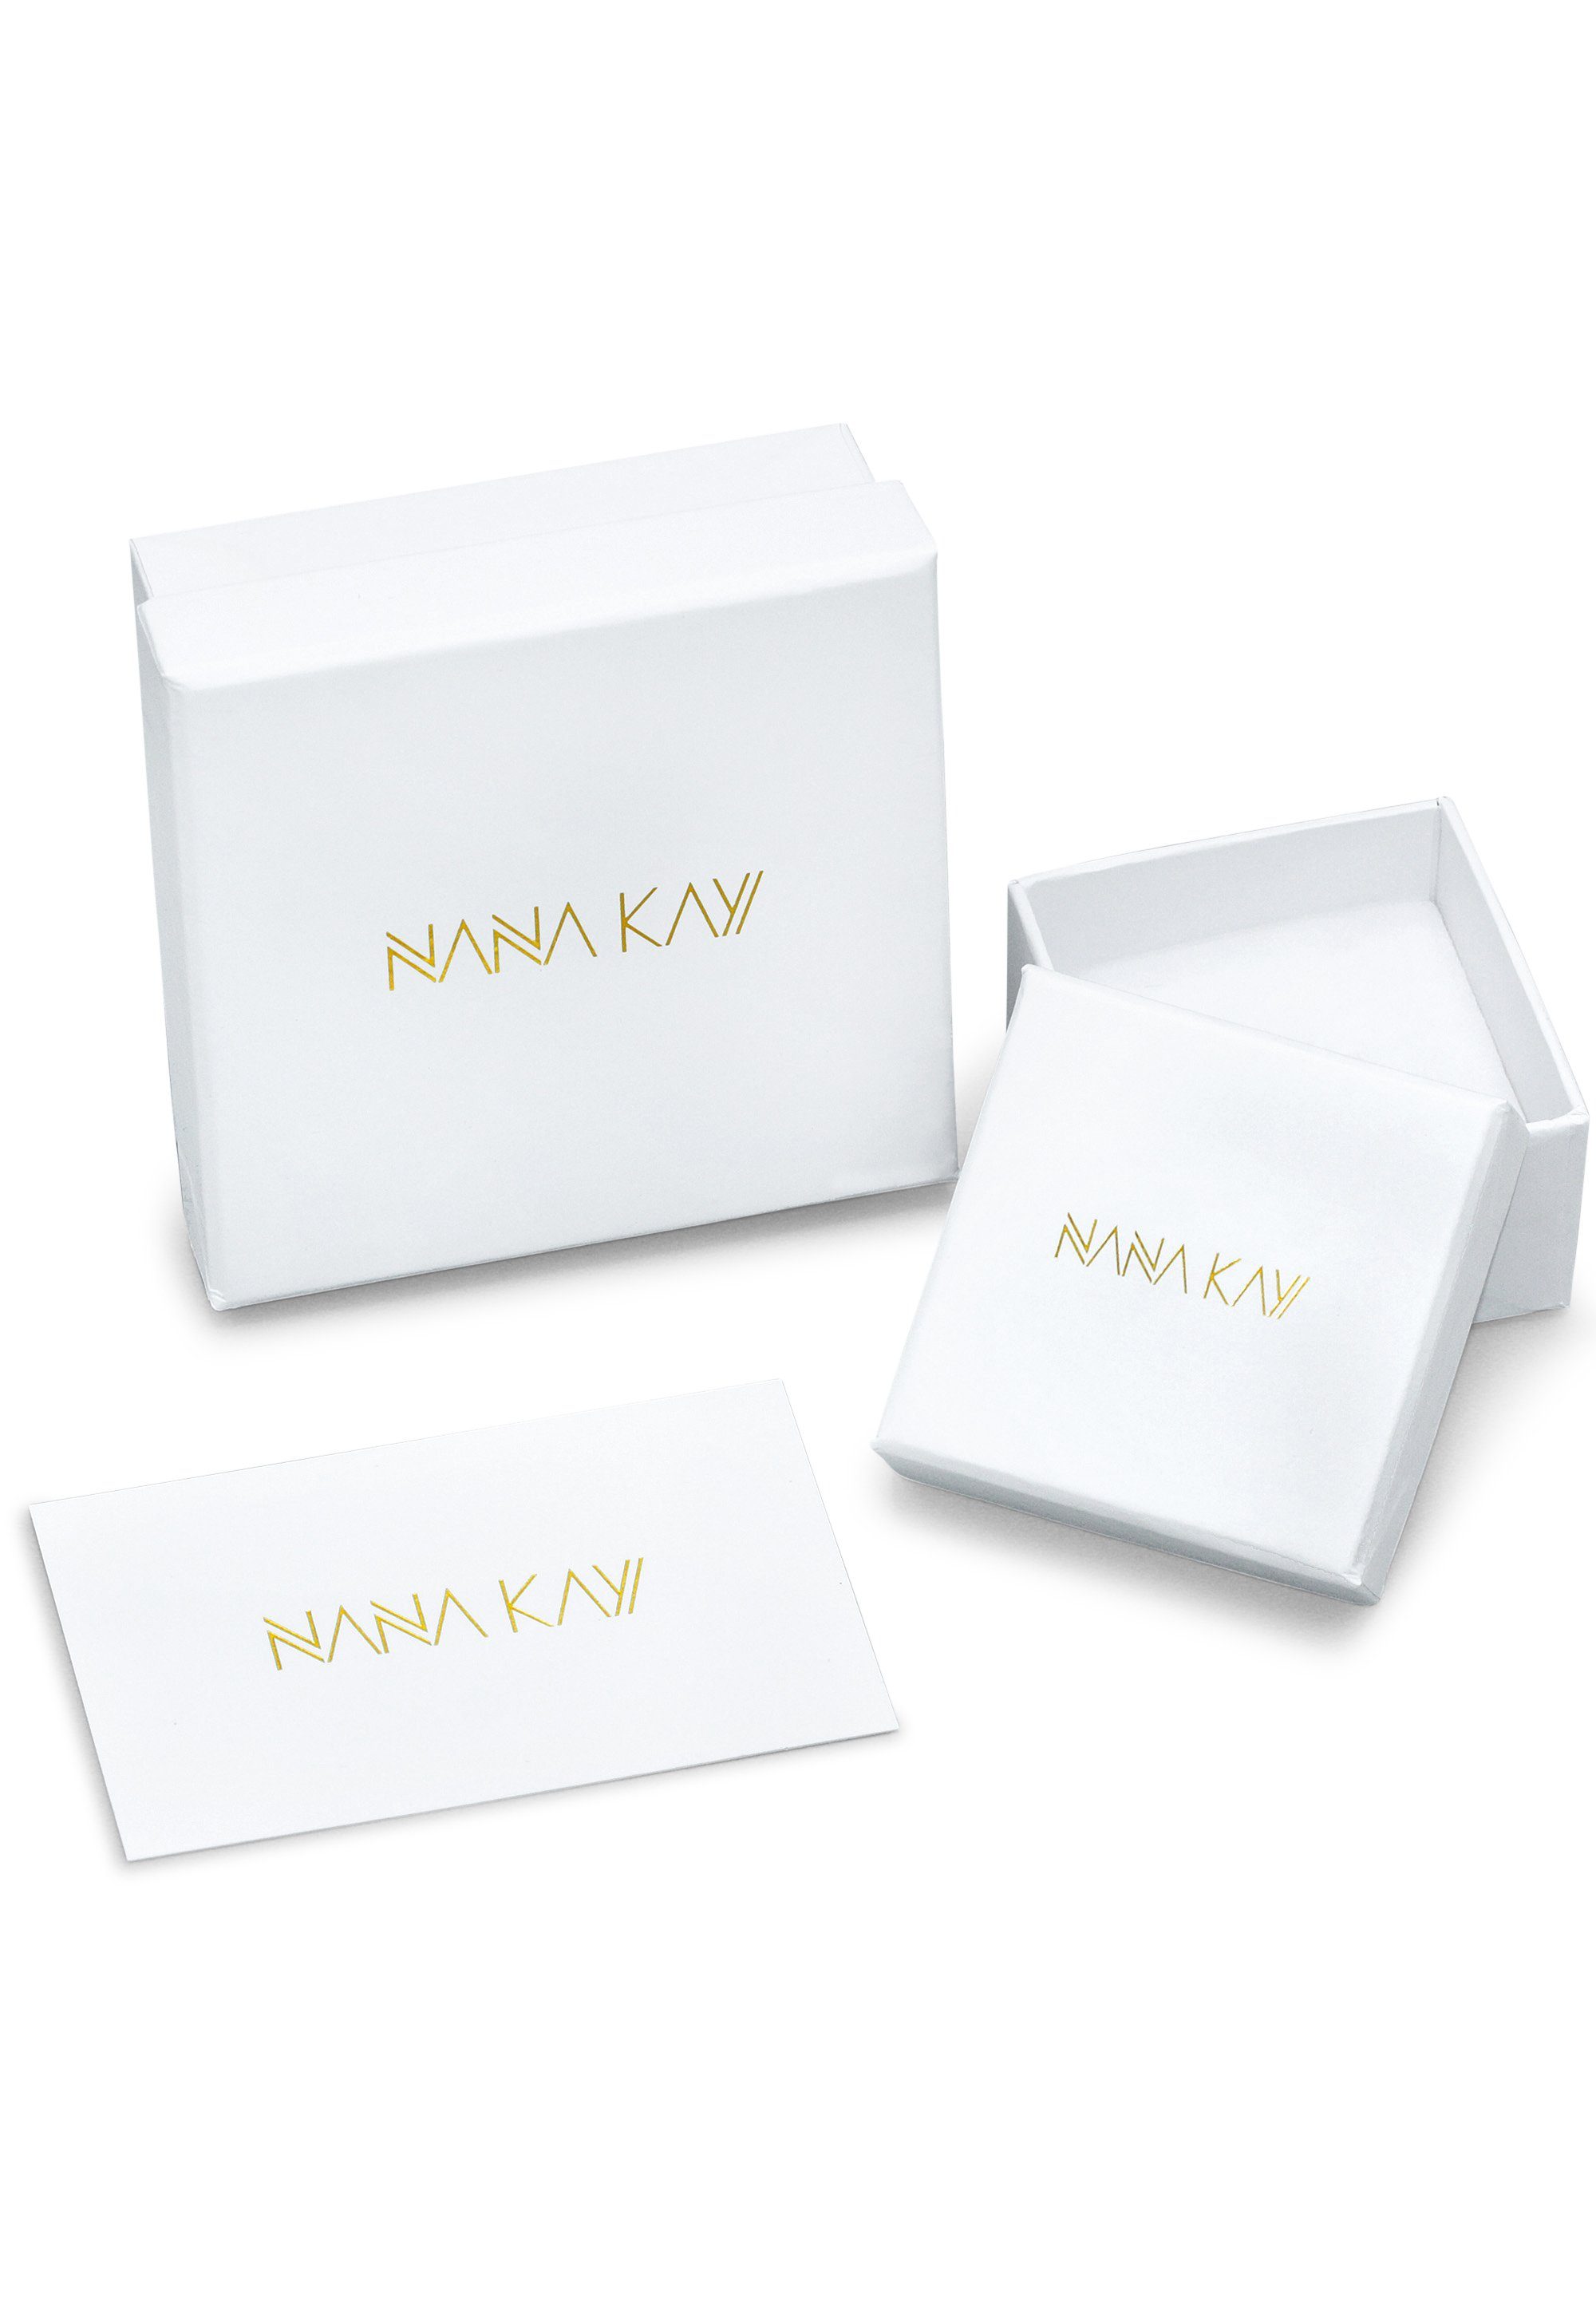 mit Nana for Emaille Gold mit Kette Anhänger NANA Kids, Kay KAY